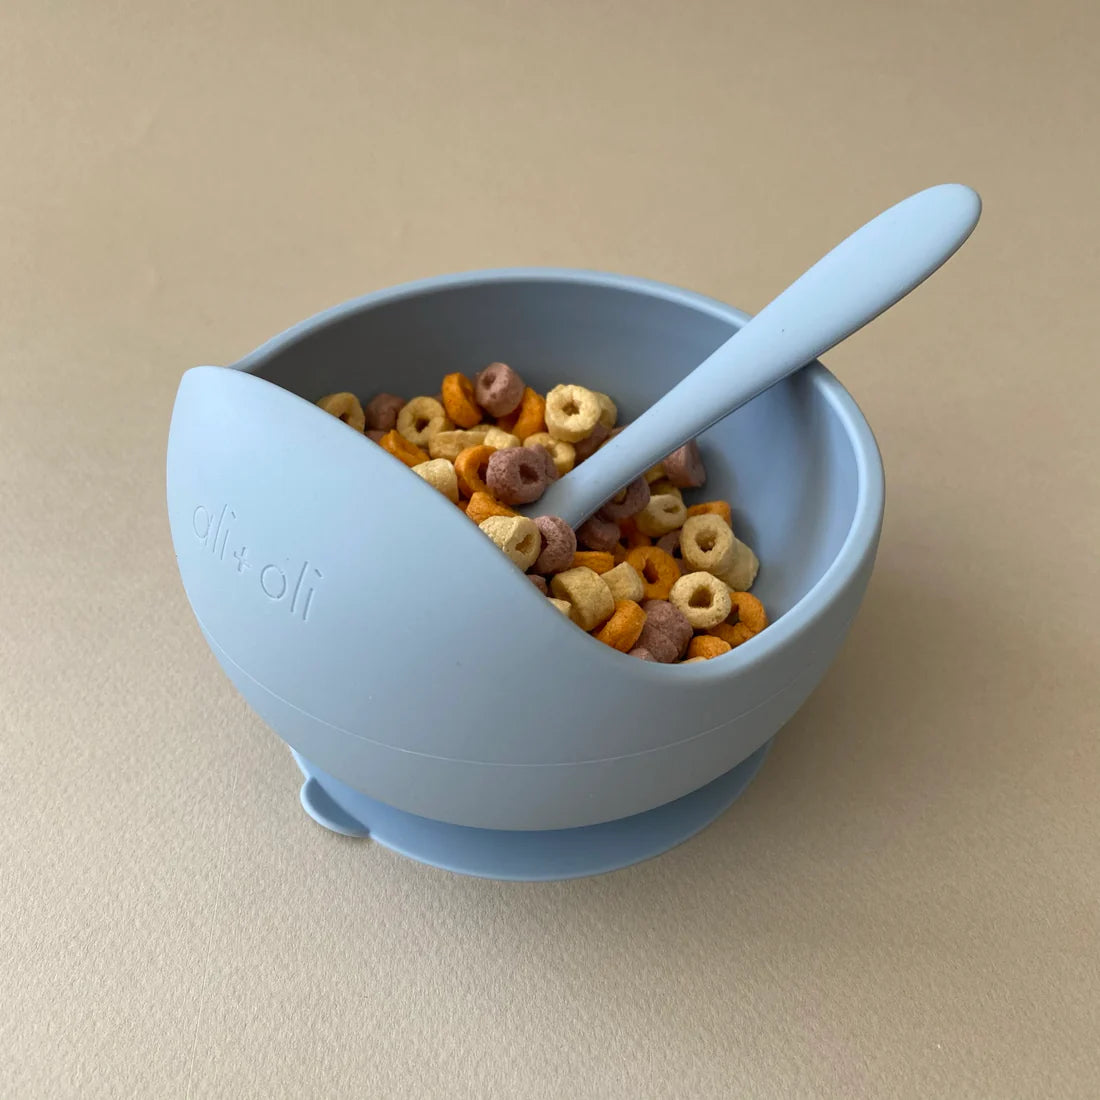 Silicone Suction Bowl & Spoon Set, Original